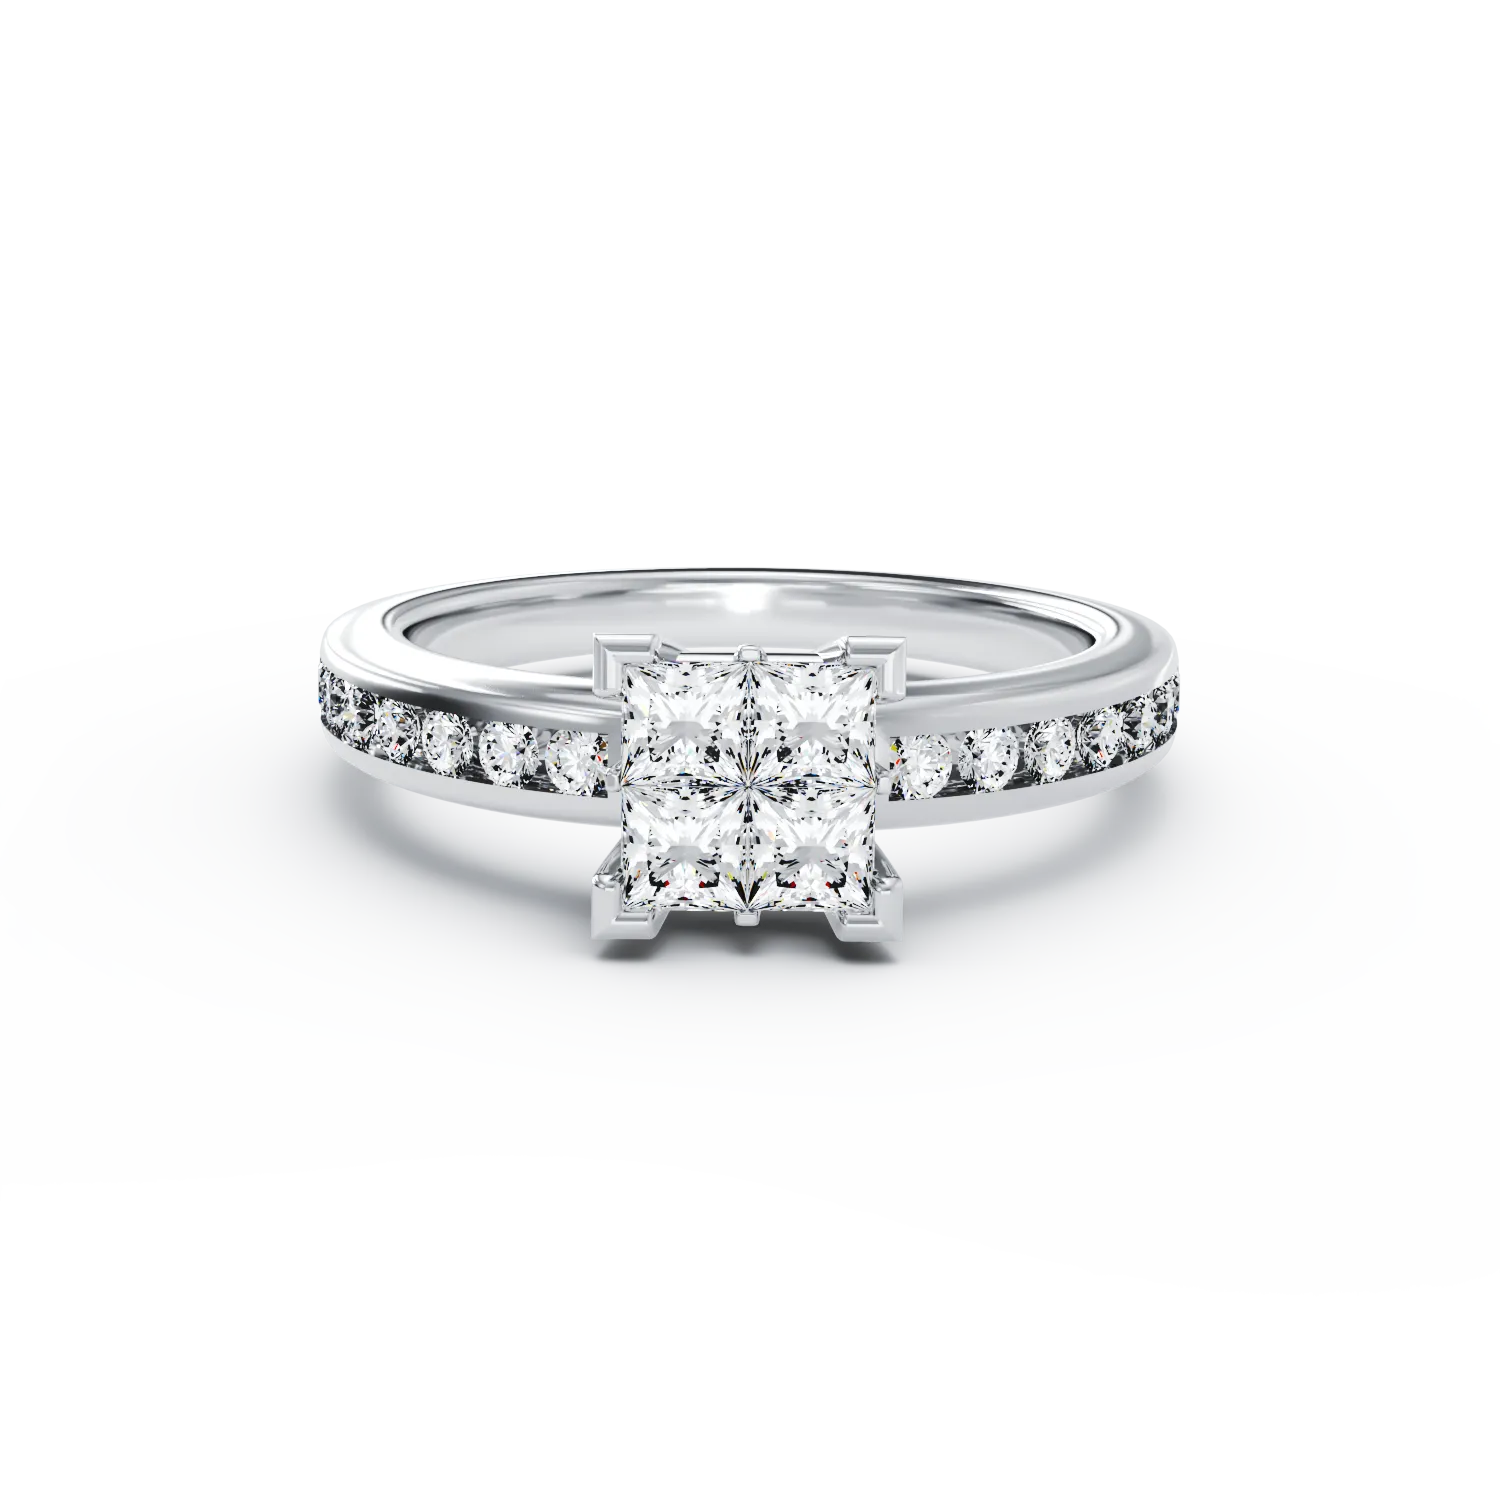 Inel de logodna din aur alb de 18K cu diamante de 0.75ct